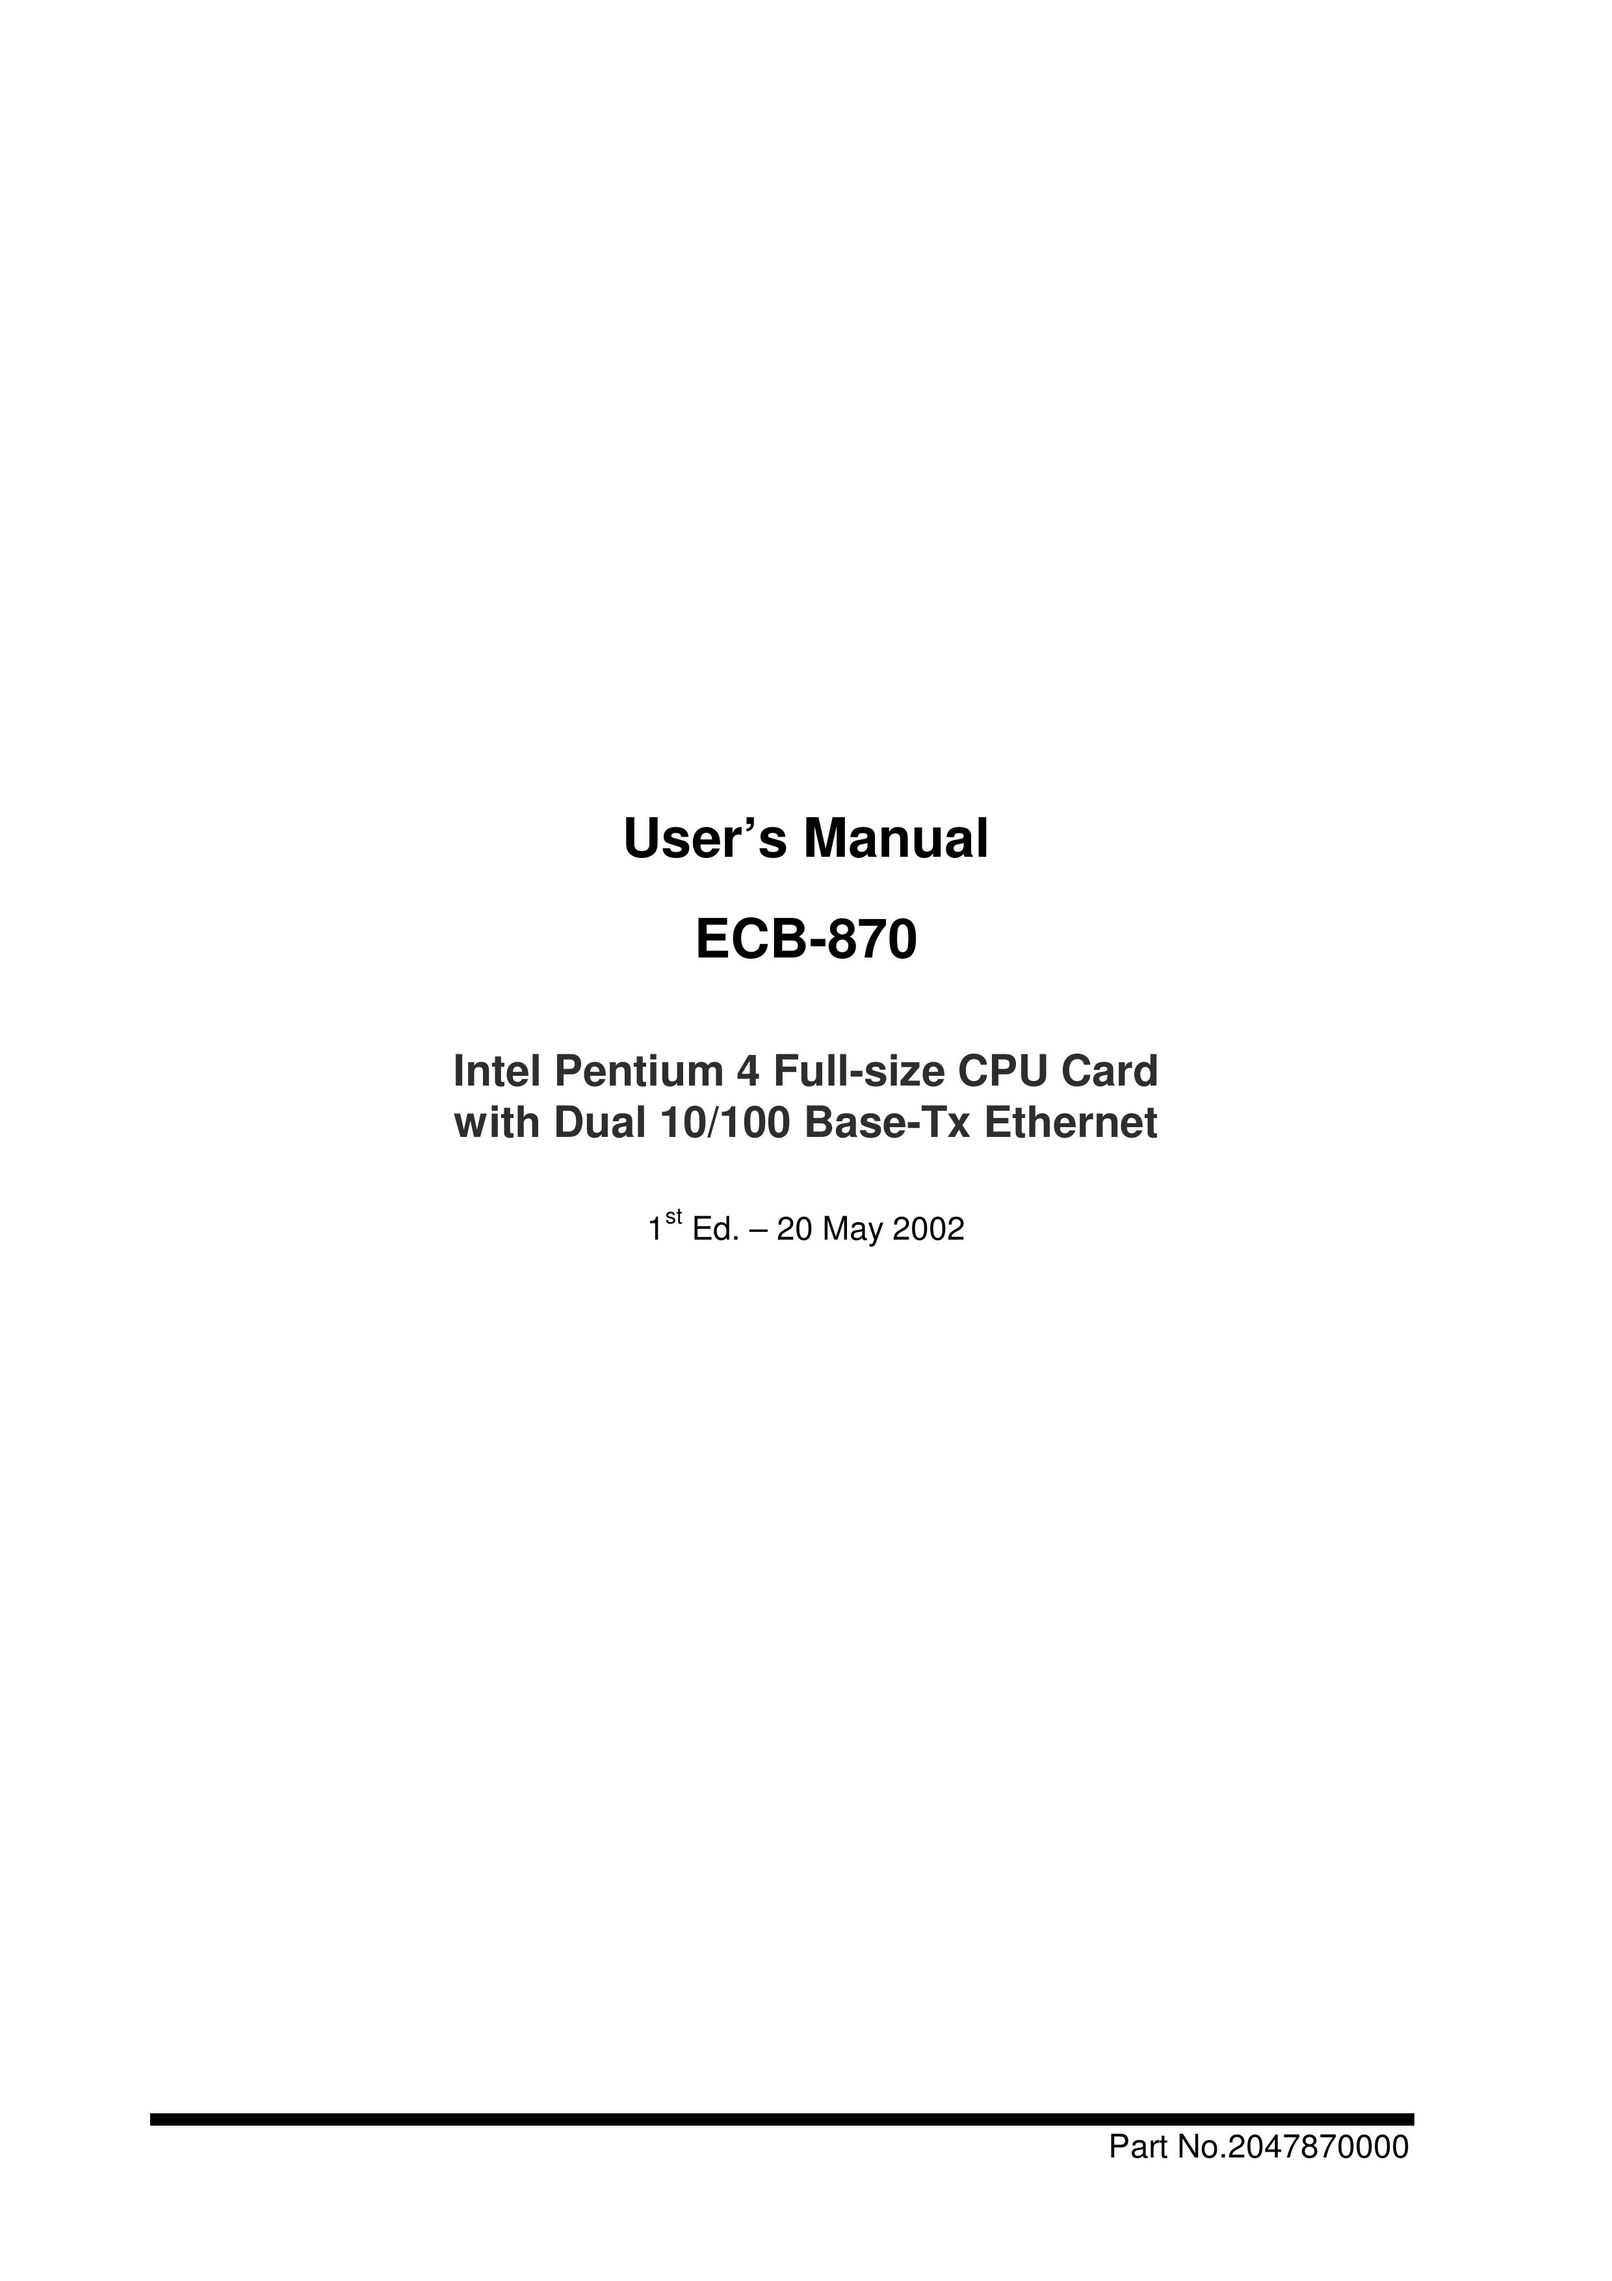 Intel ECB-870 Personal Computer User Manual